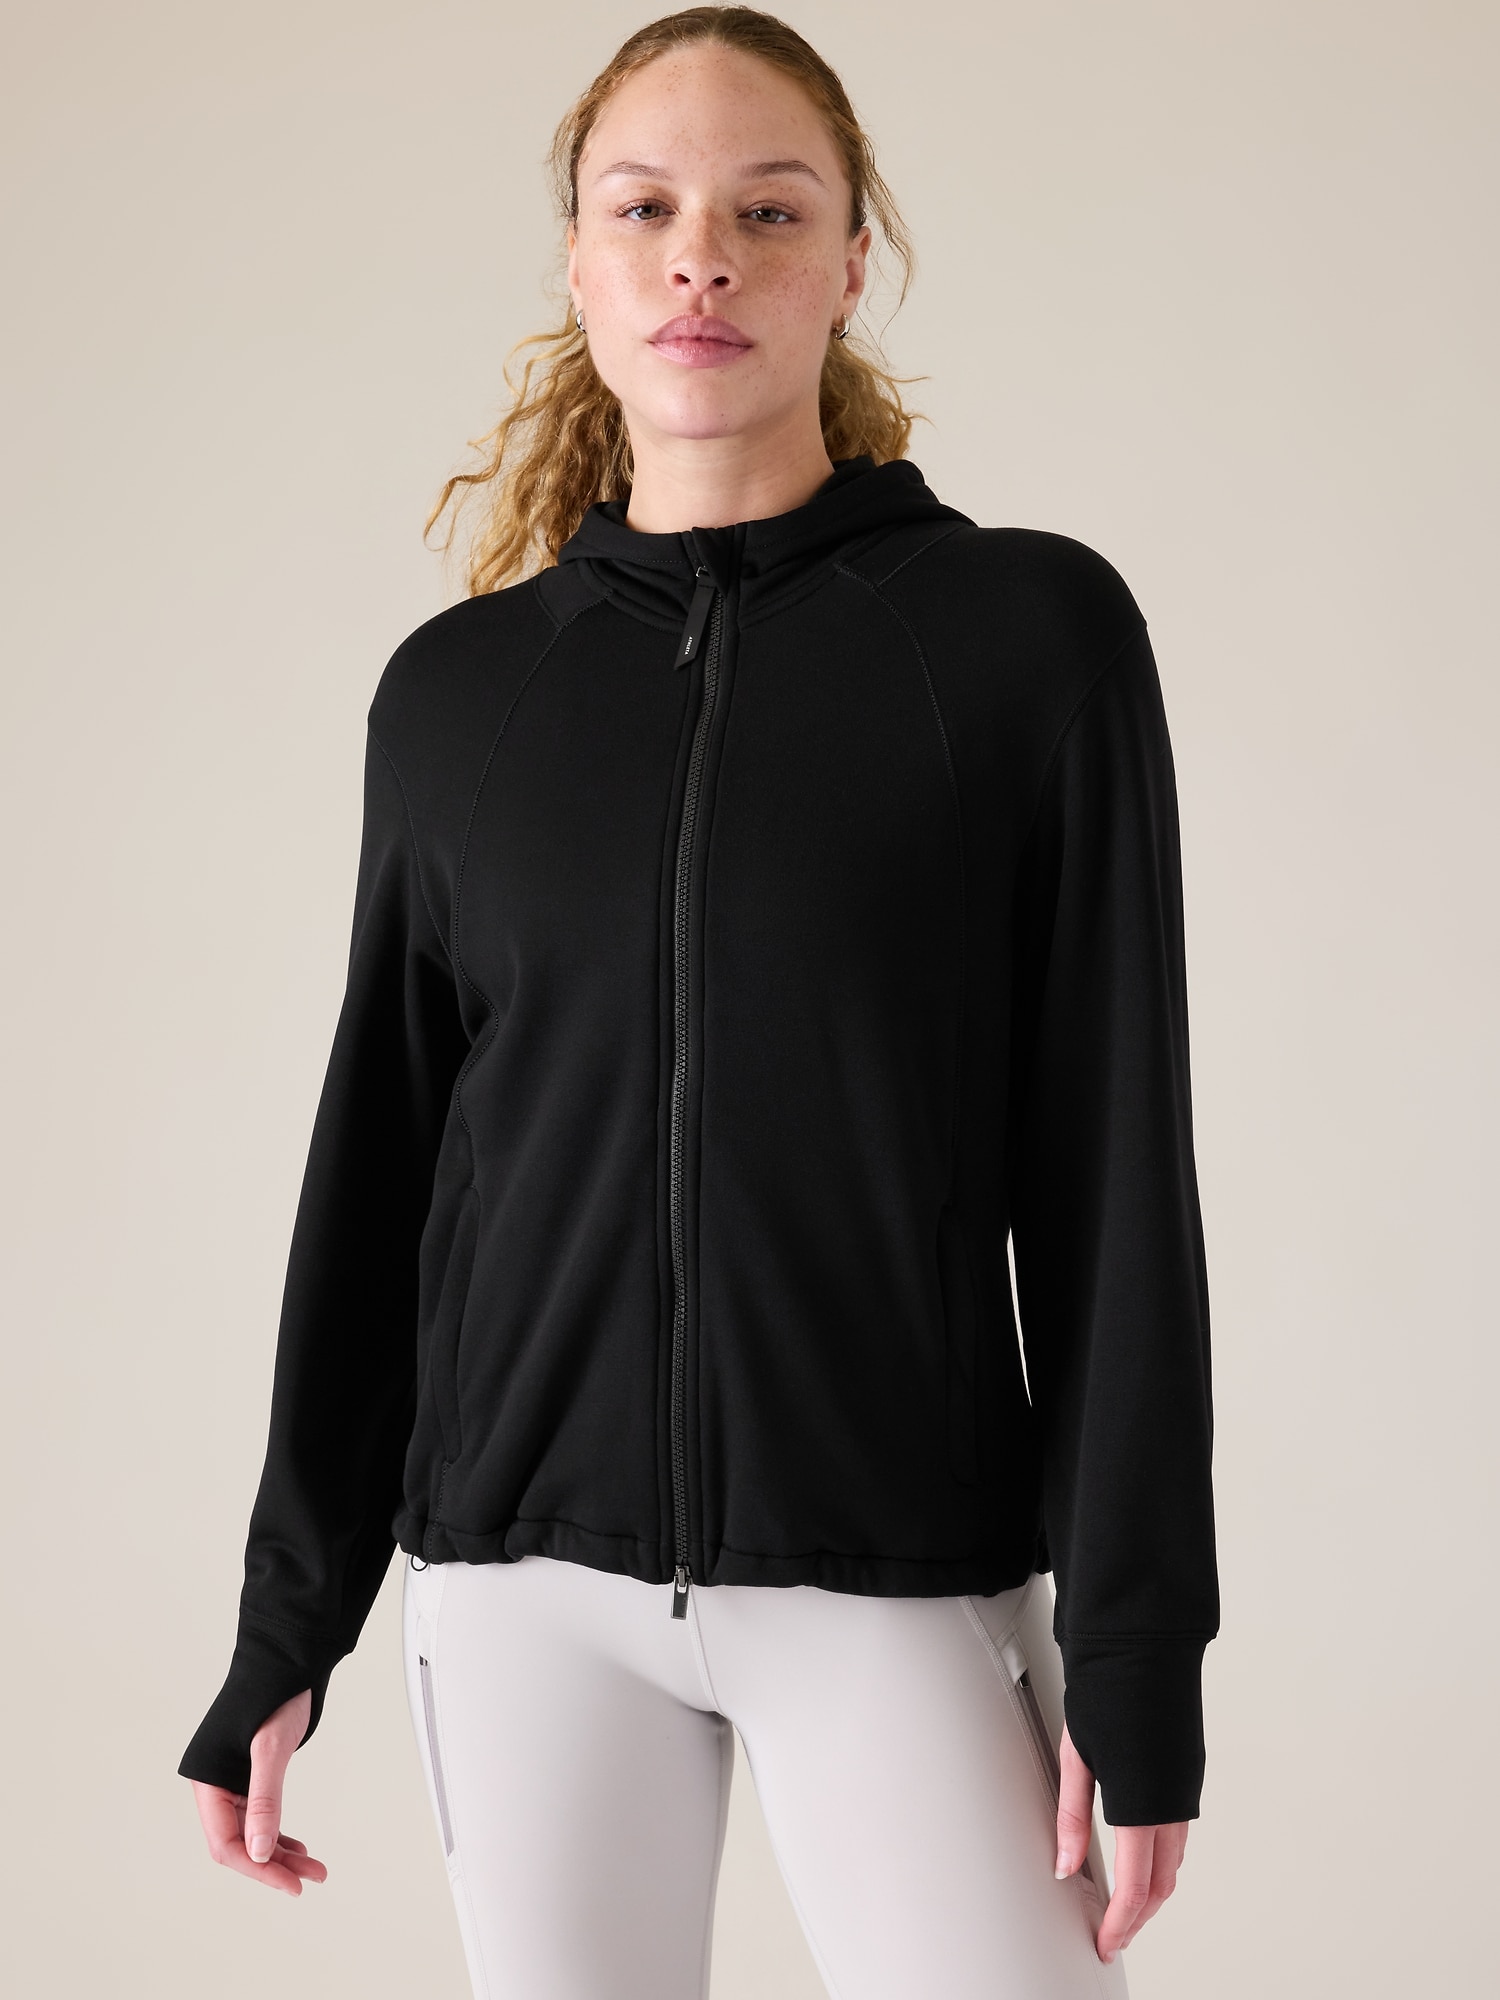 Lululemon Define Jacket Black Full Zip Activewear Size 10